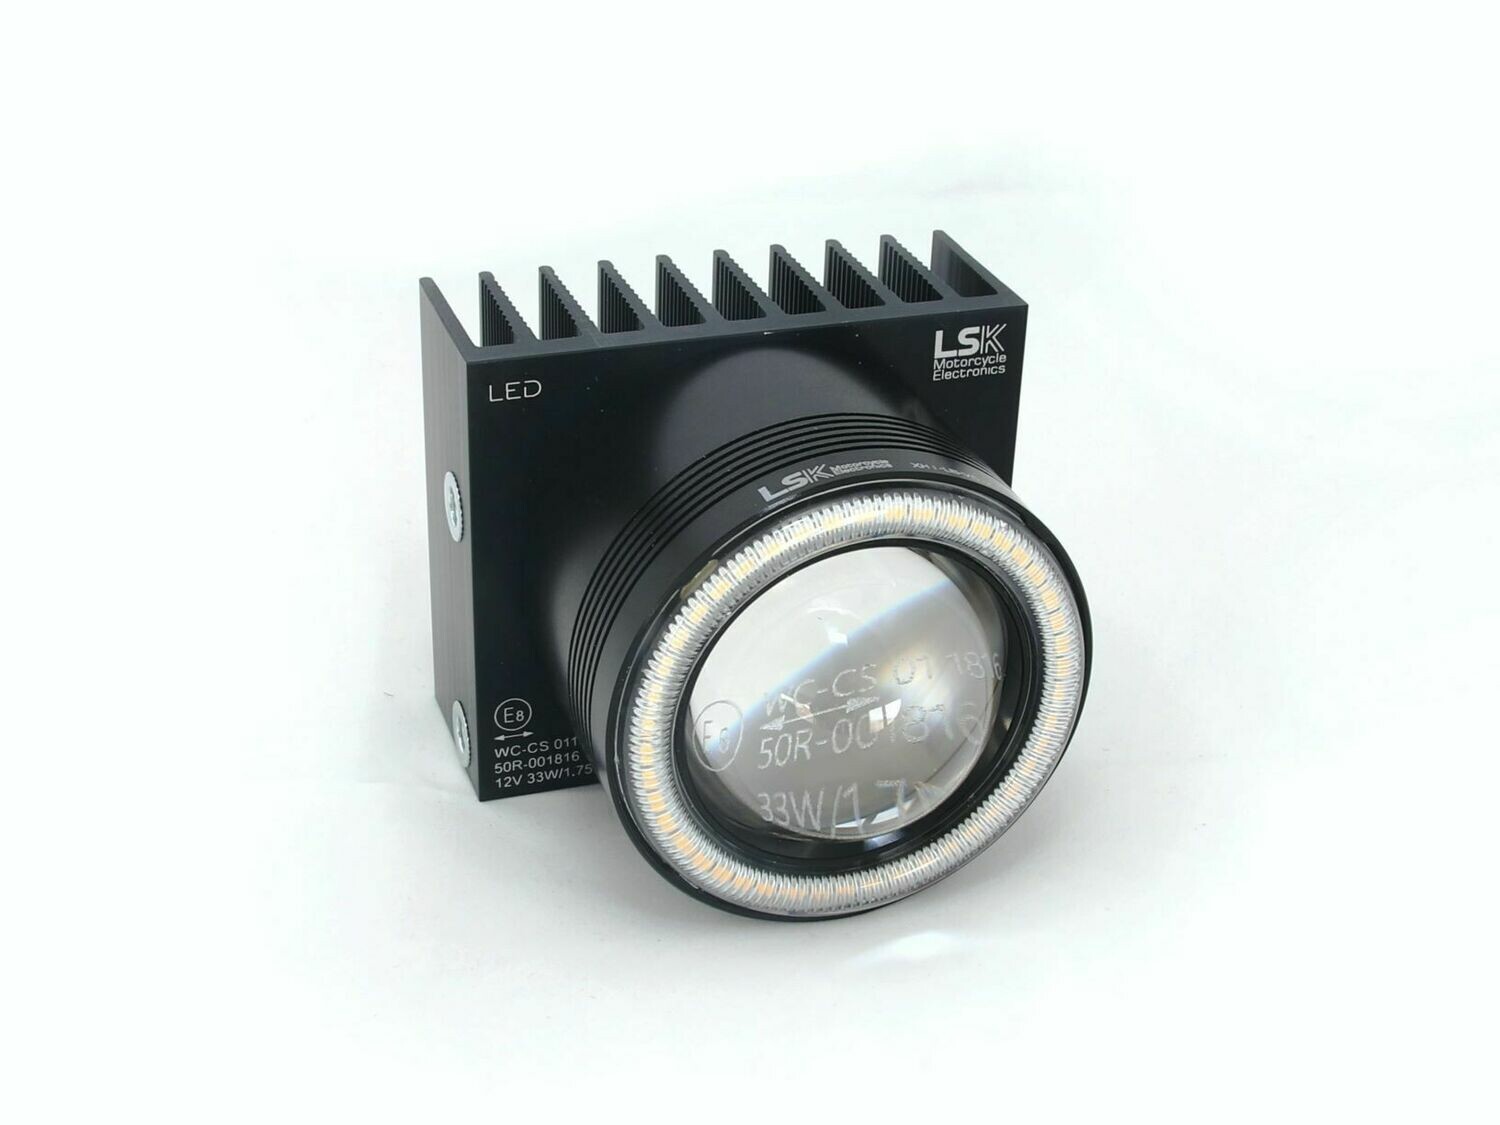 E8 approved LED headlight